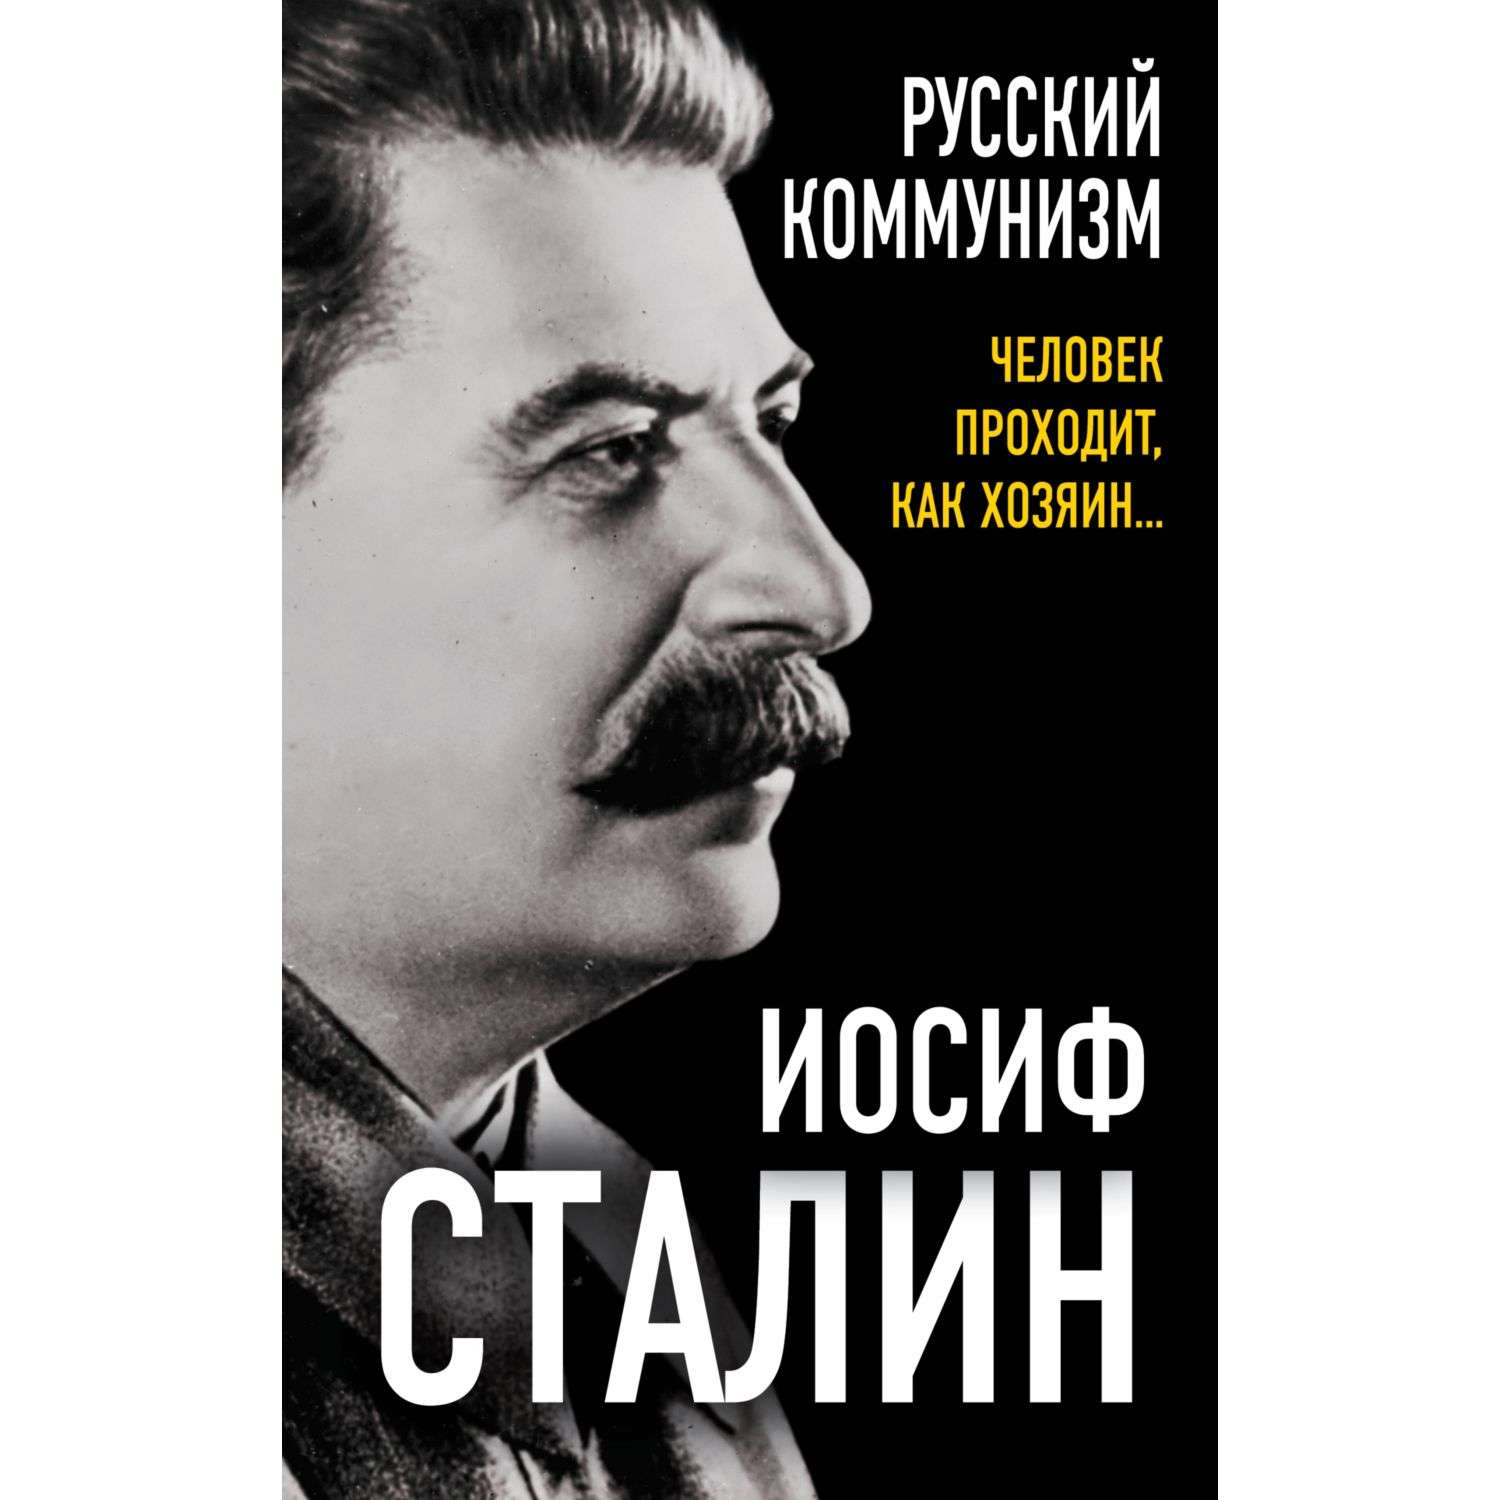 Книга Эксмо Русский коммунизм Человек проходит как хозяин - фото 1